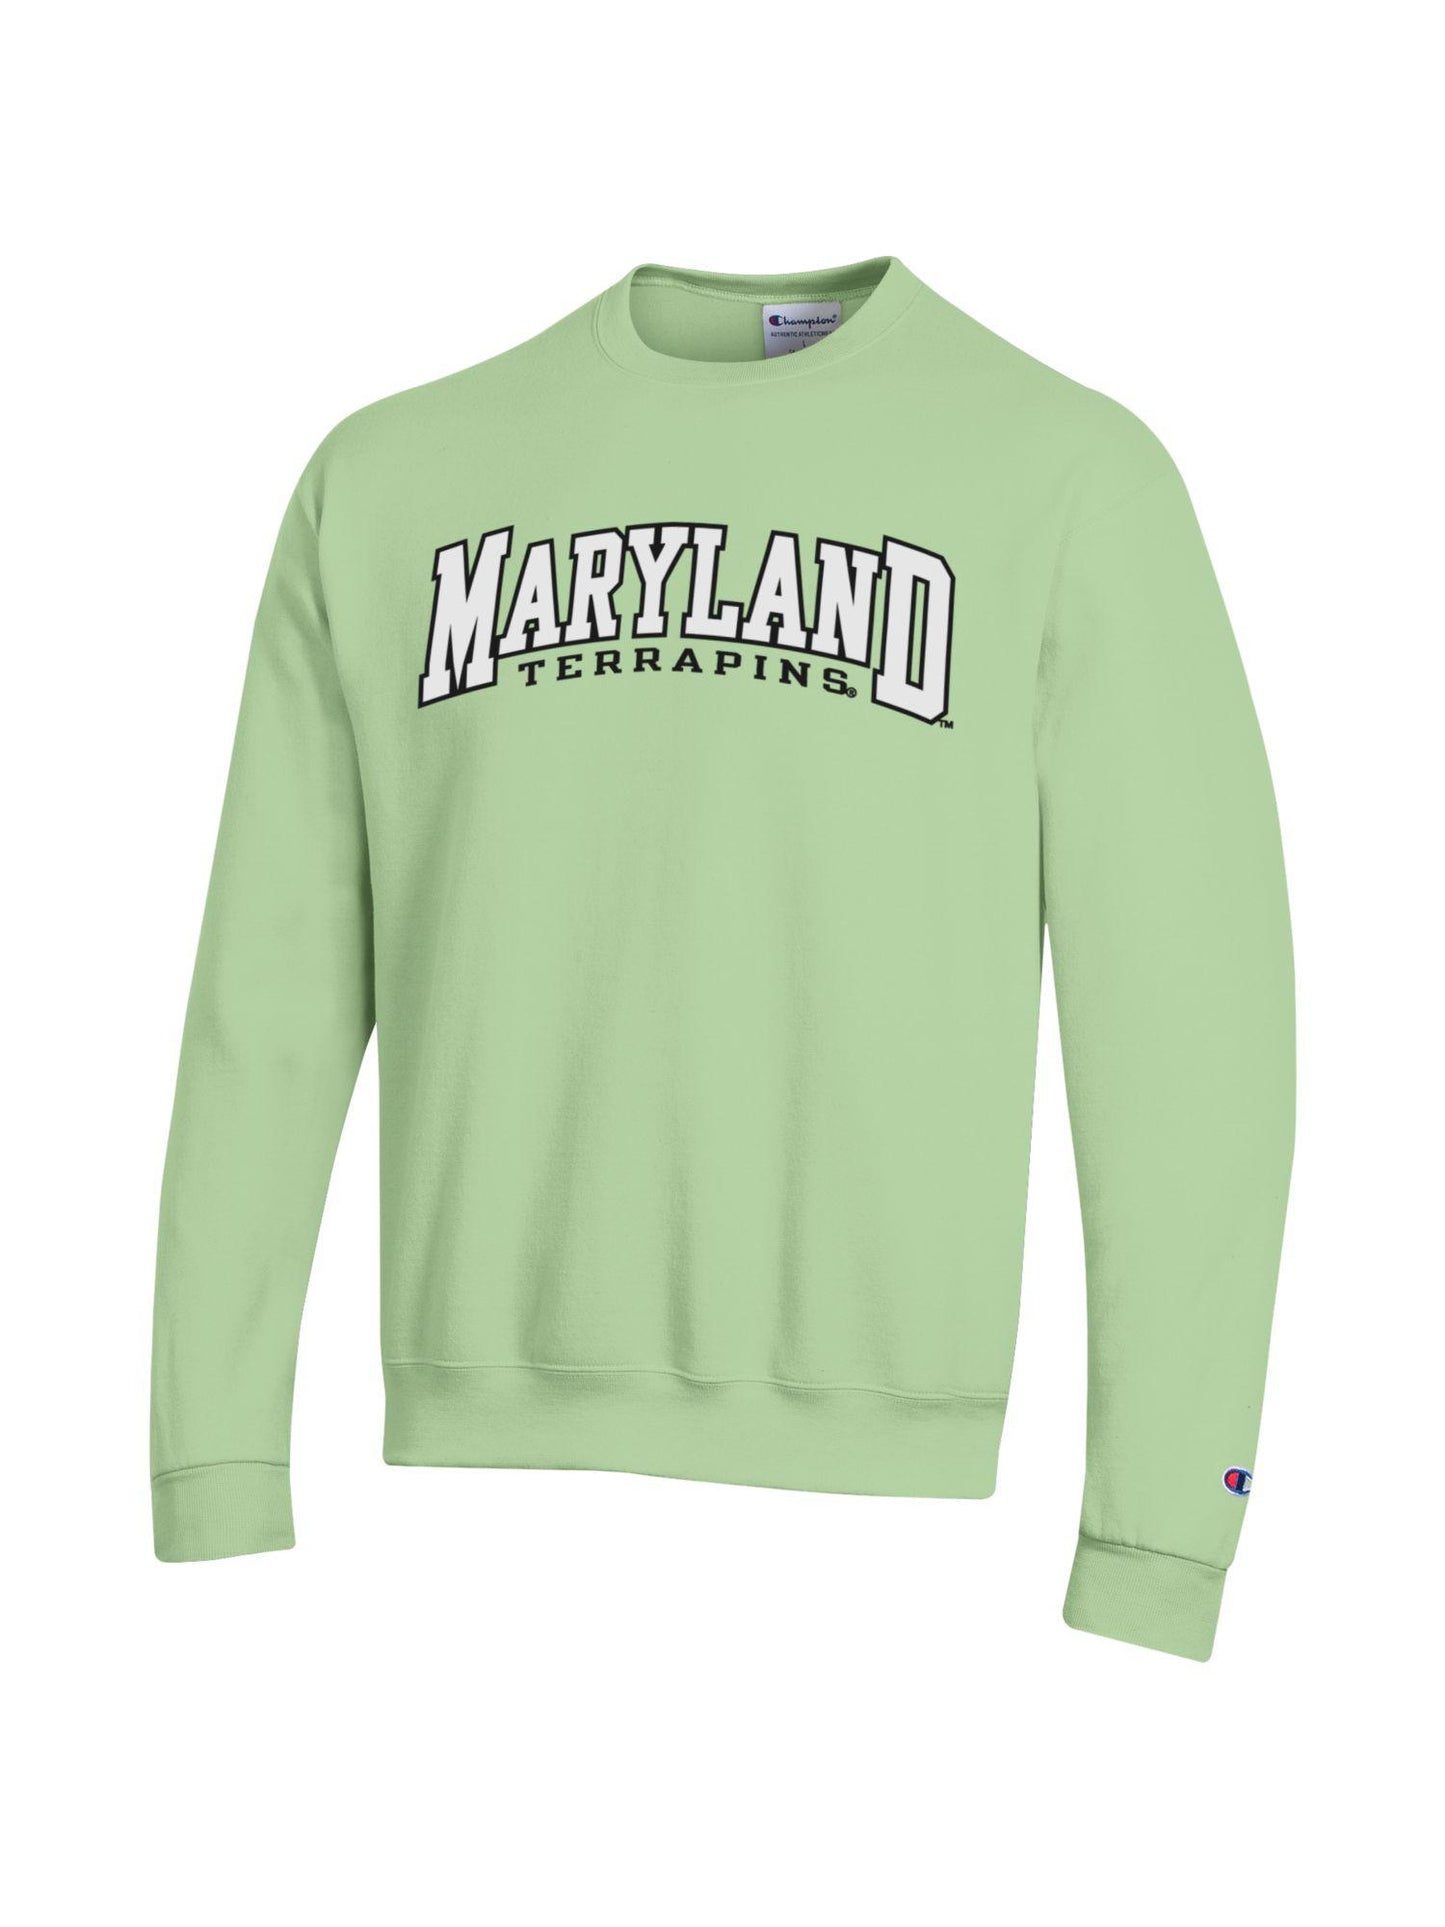 Champion University of Maryland Embroidered Spirit Sweatshirt (Light Green)